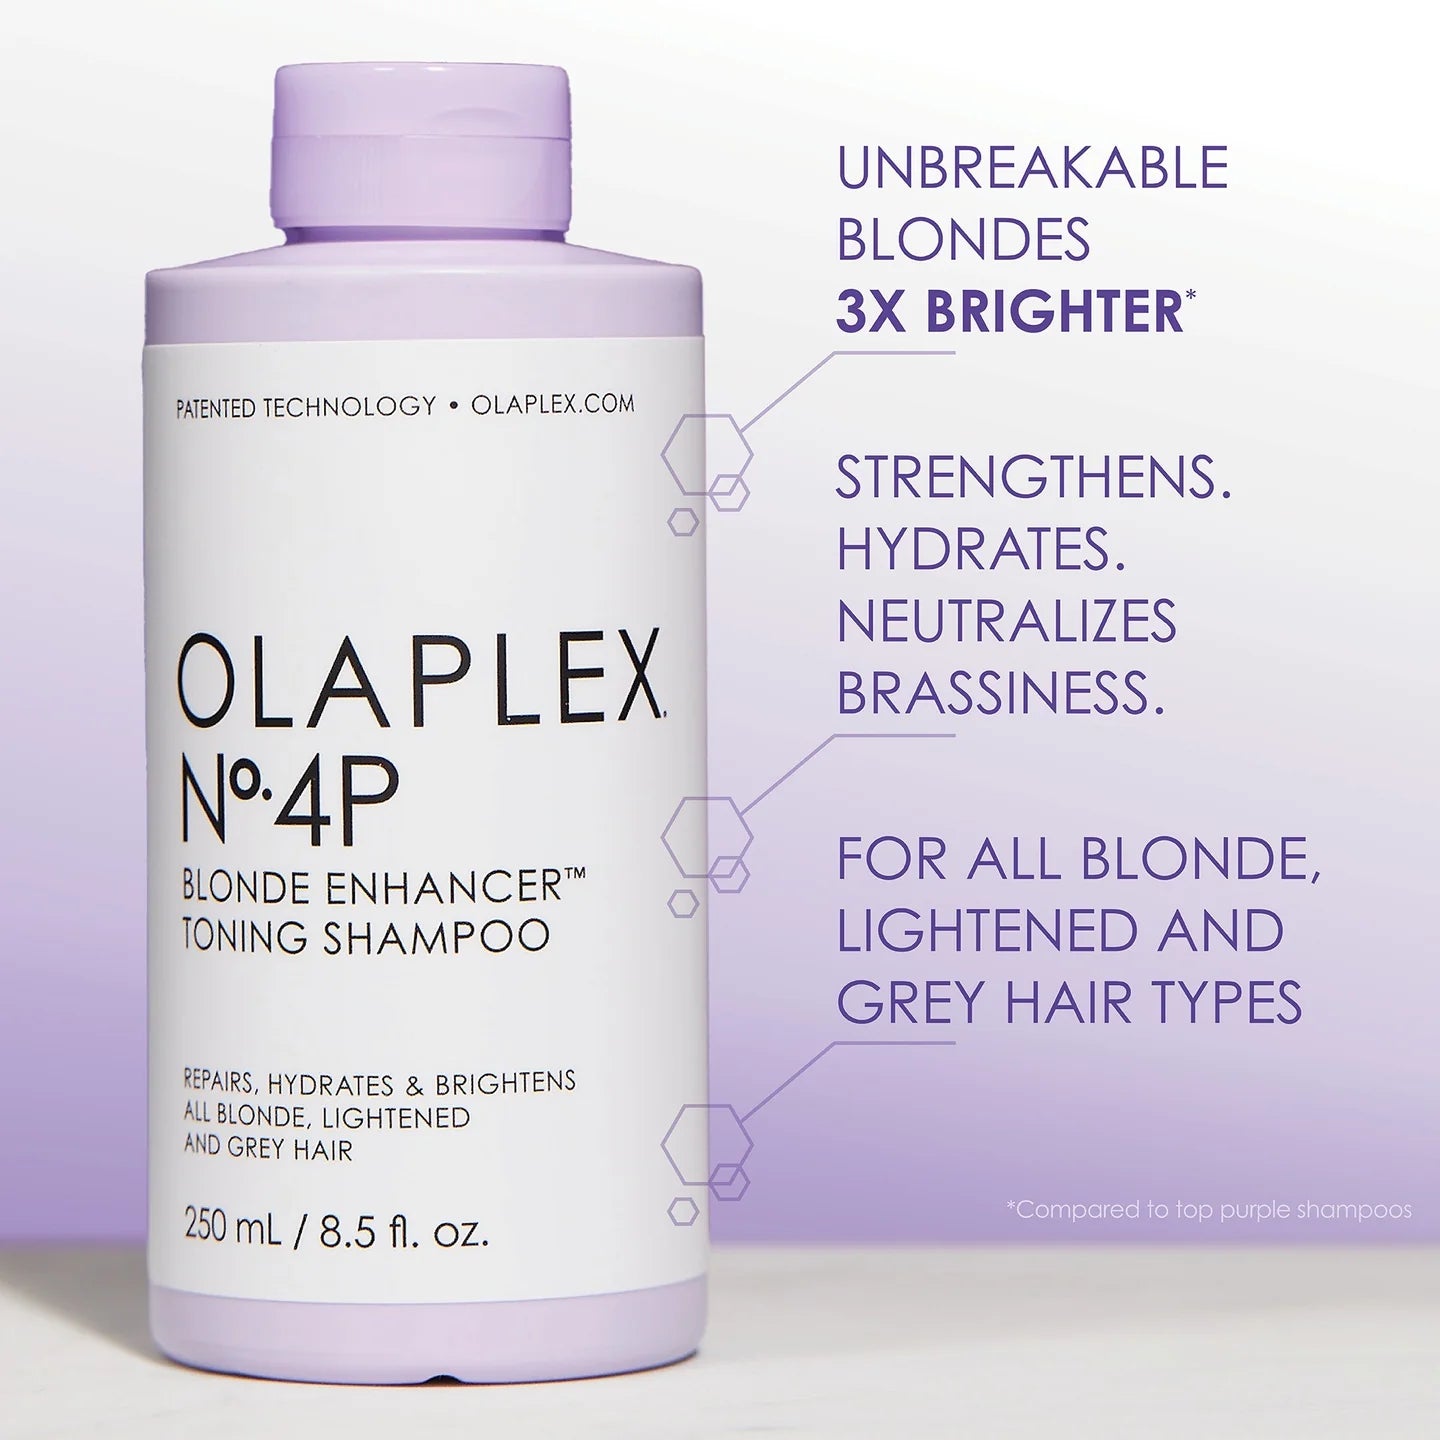 OLAPLEX Nº.4P BLONDE ENHANCER™ TONING SHAMPOO